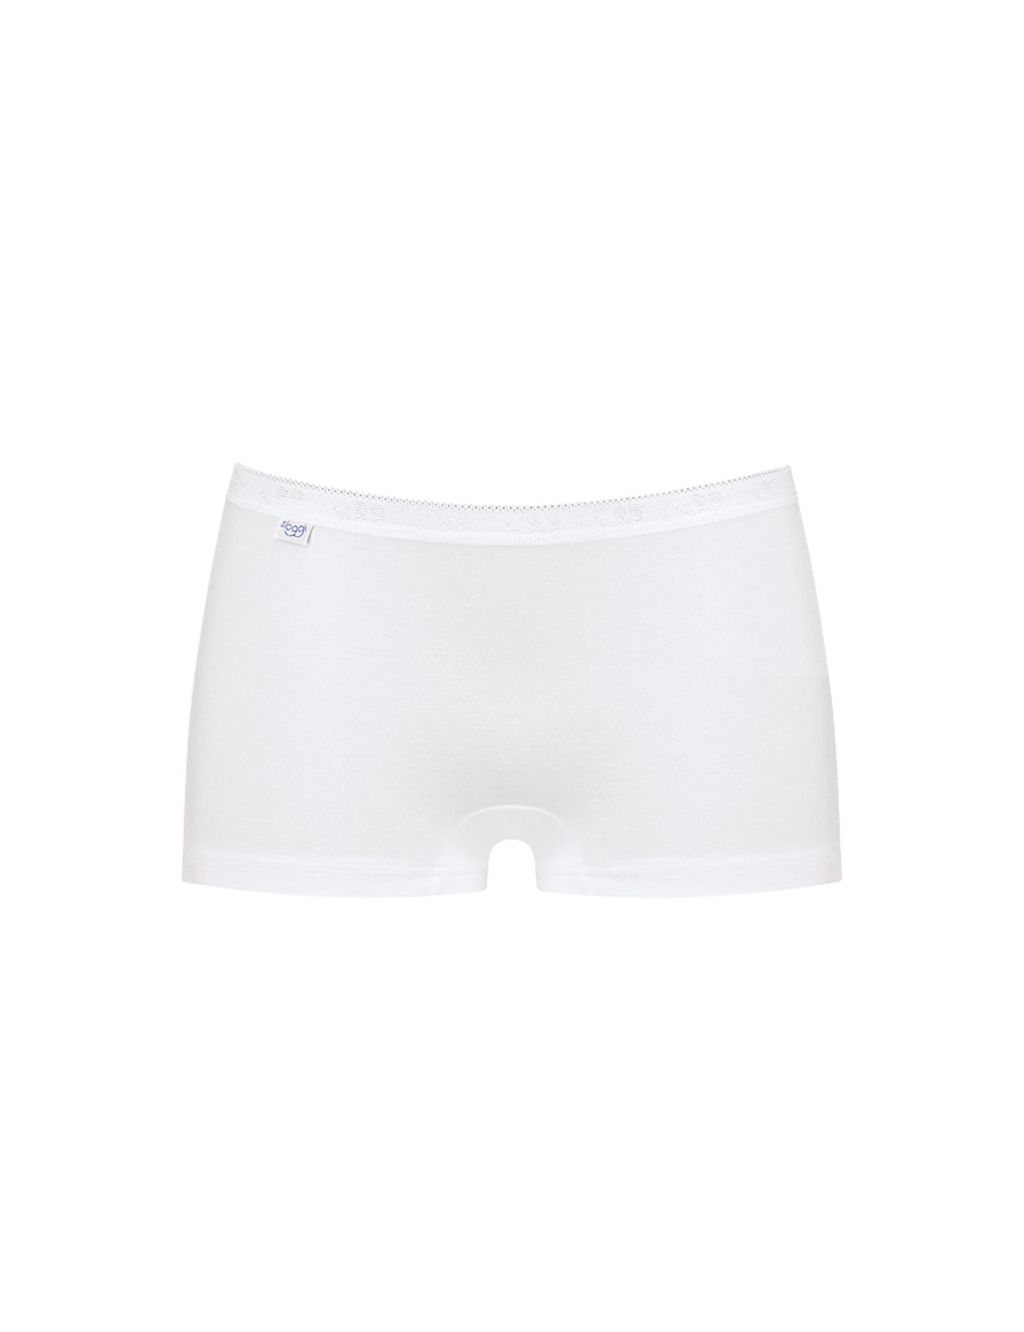 Basic+ Cotton Rich High Waisted Shorts image 2